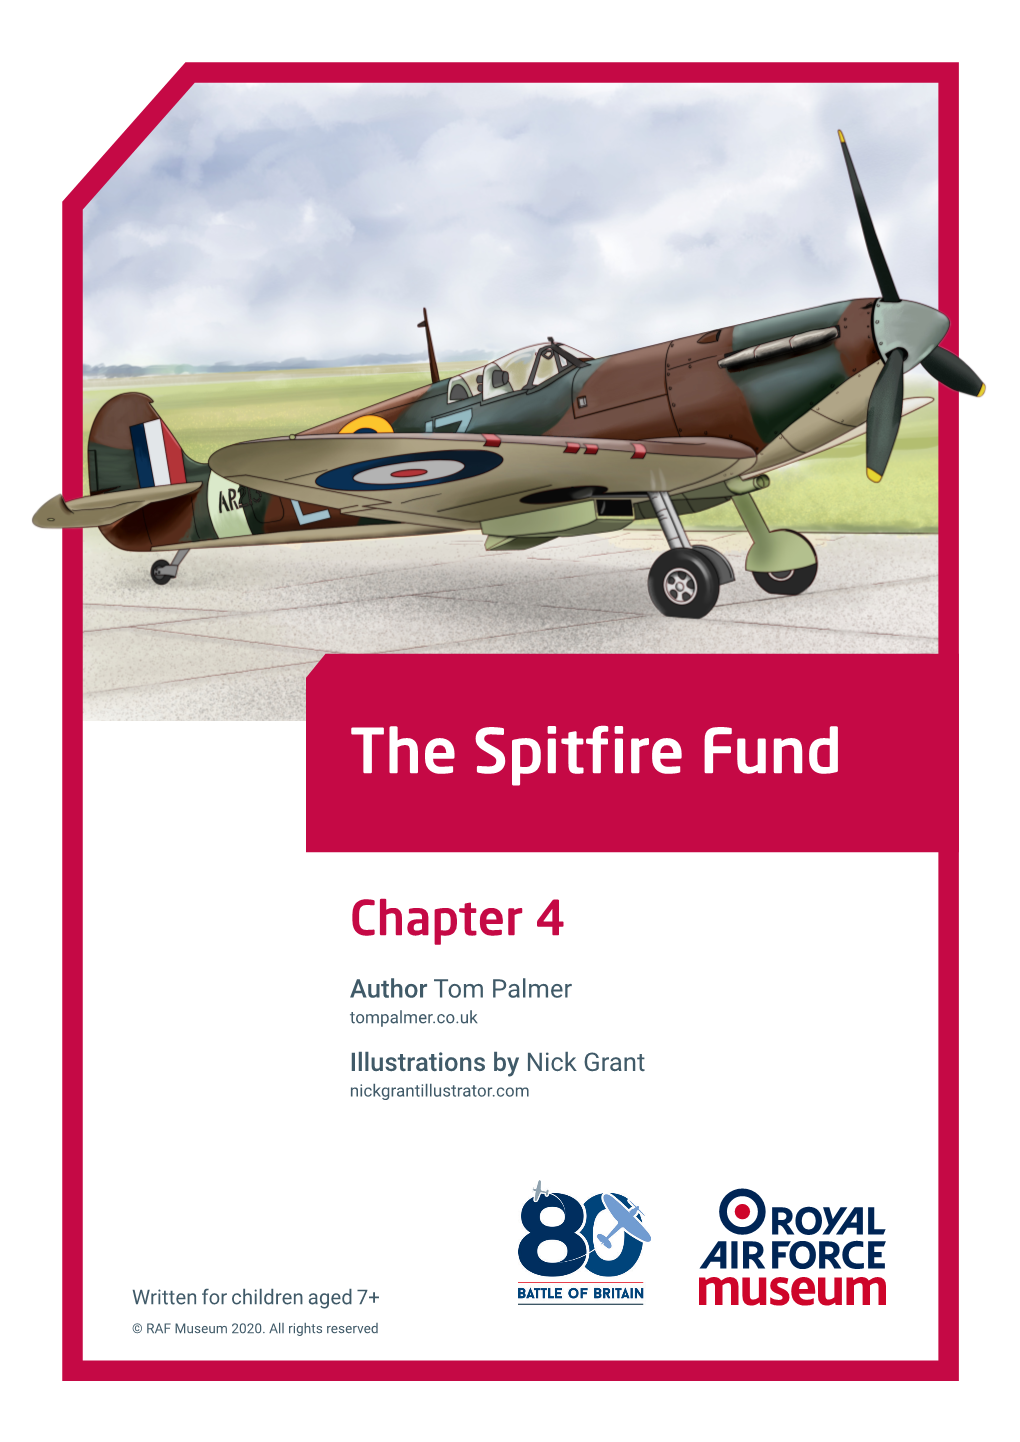 The Spitfire Fund